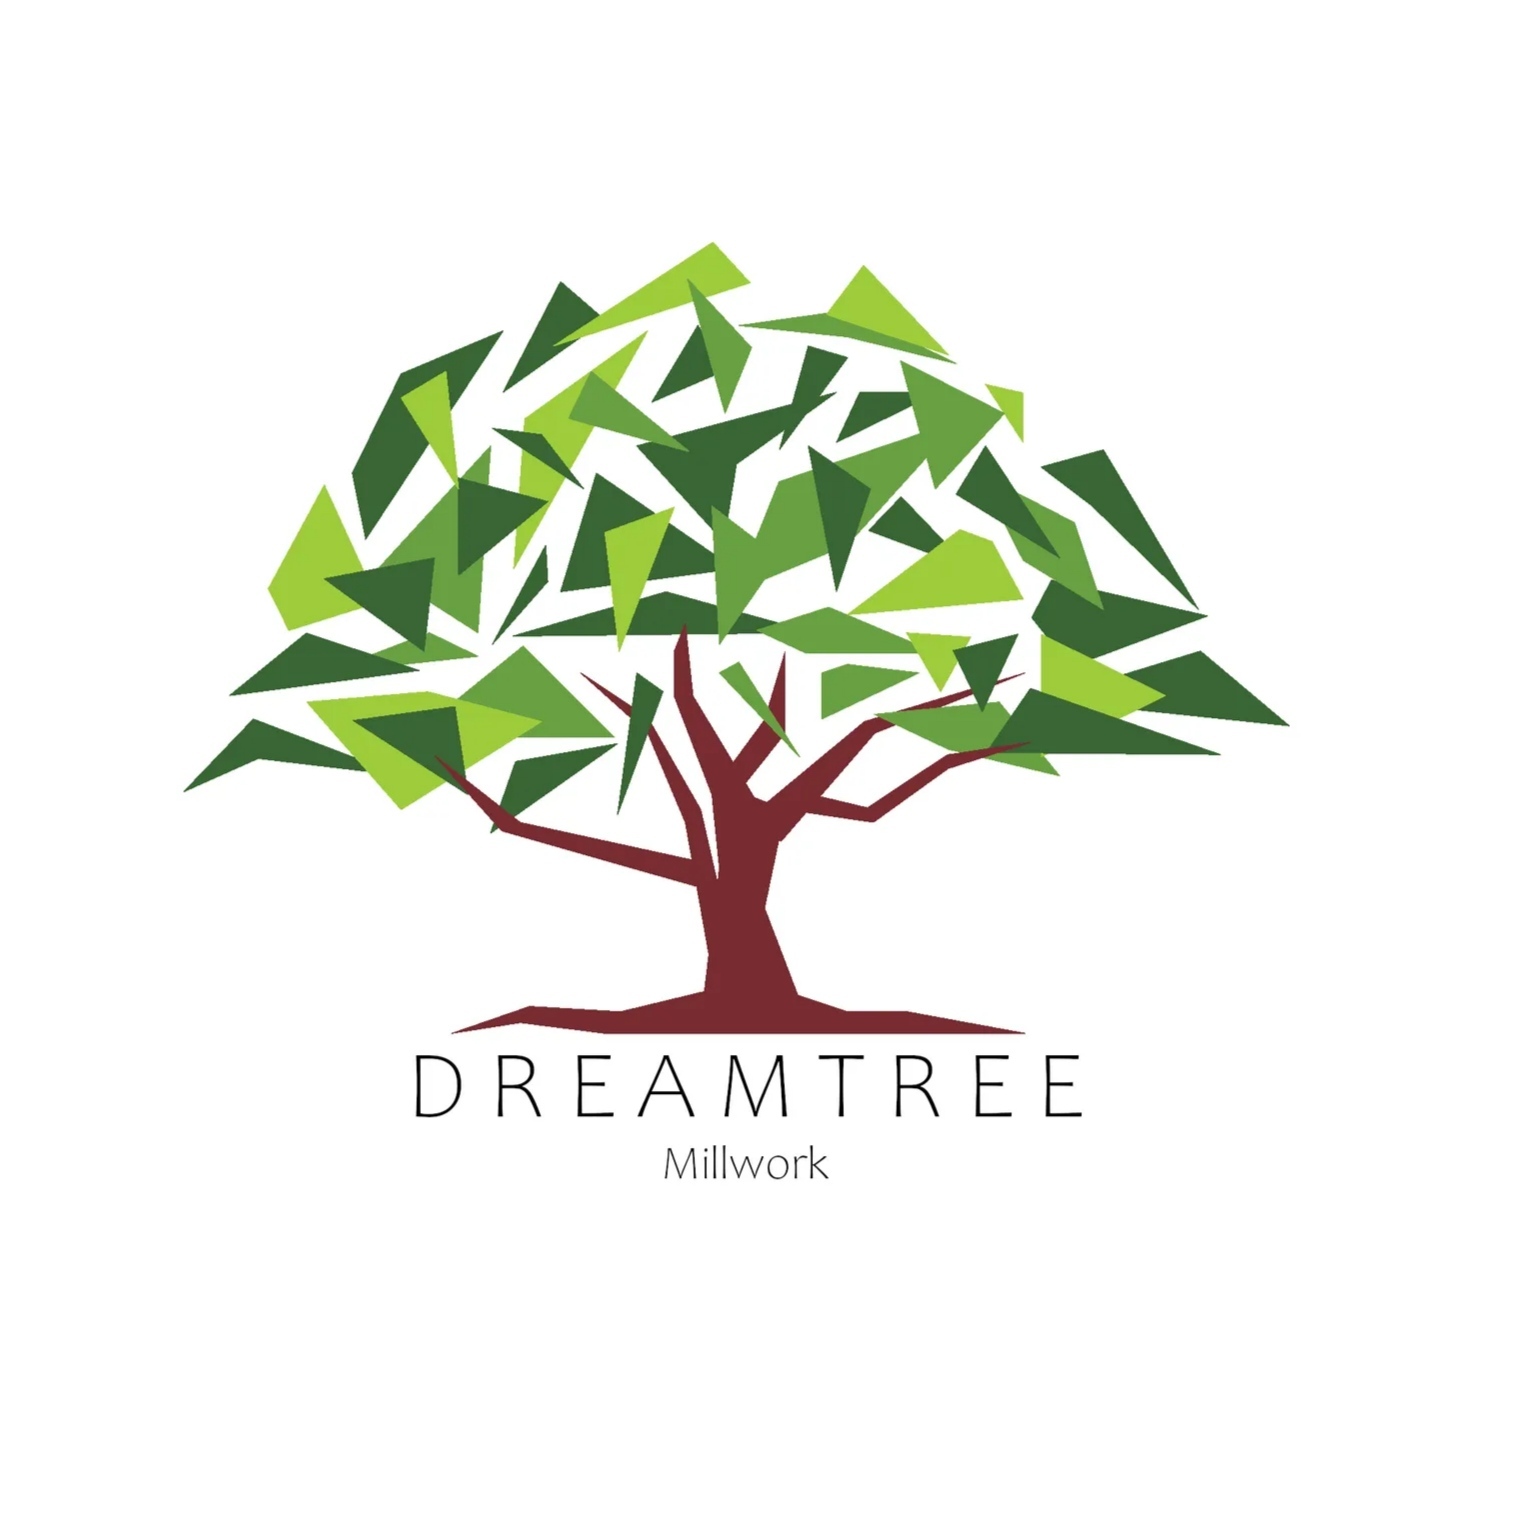 DreamTree Millwork's logo